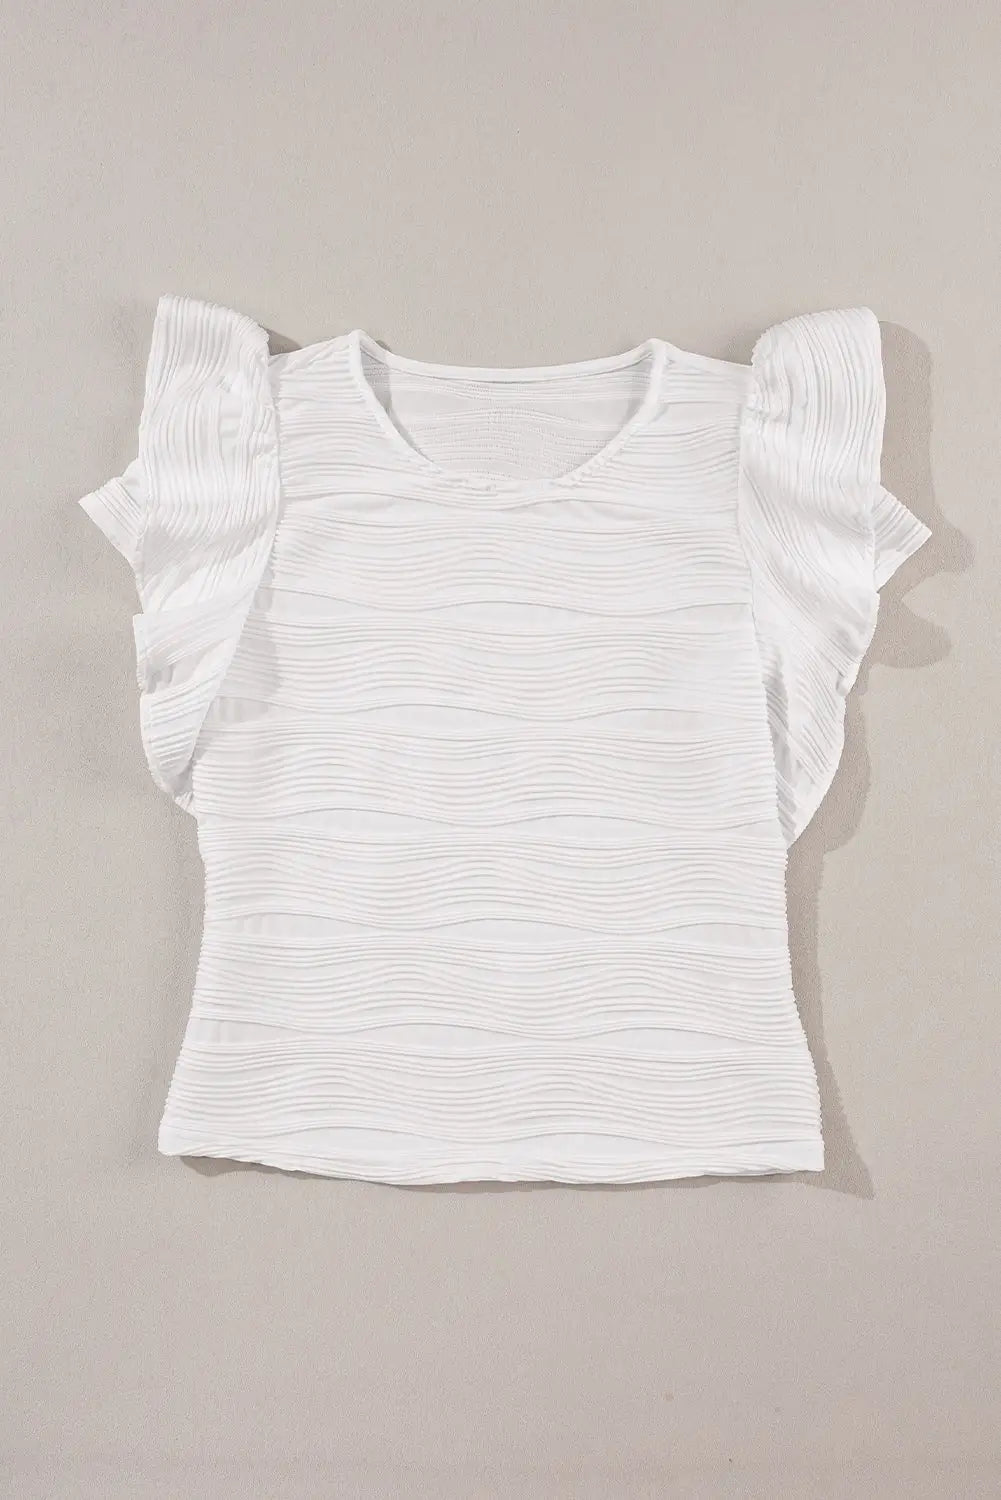 White wavy textured ruffle sleeve top - tops